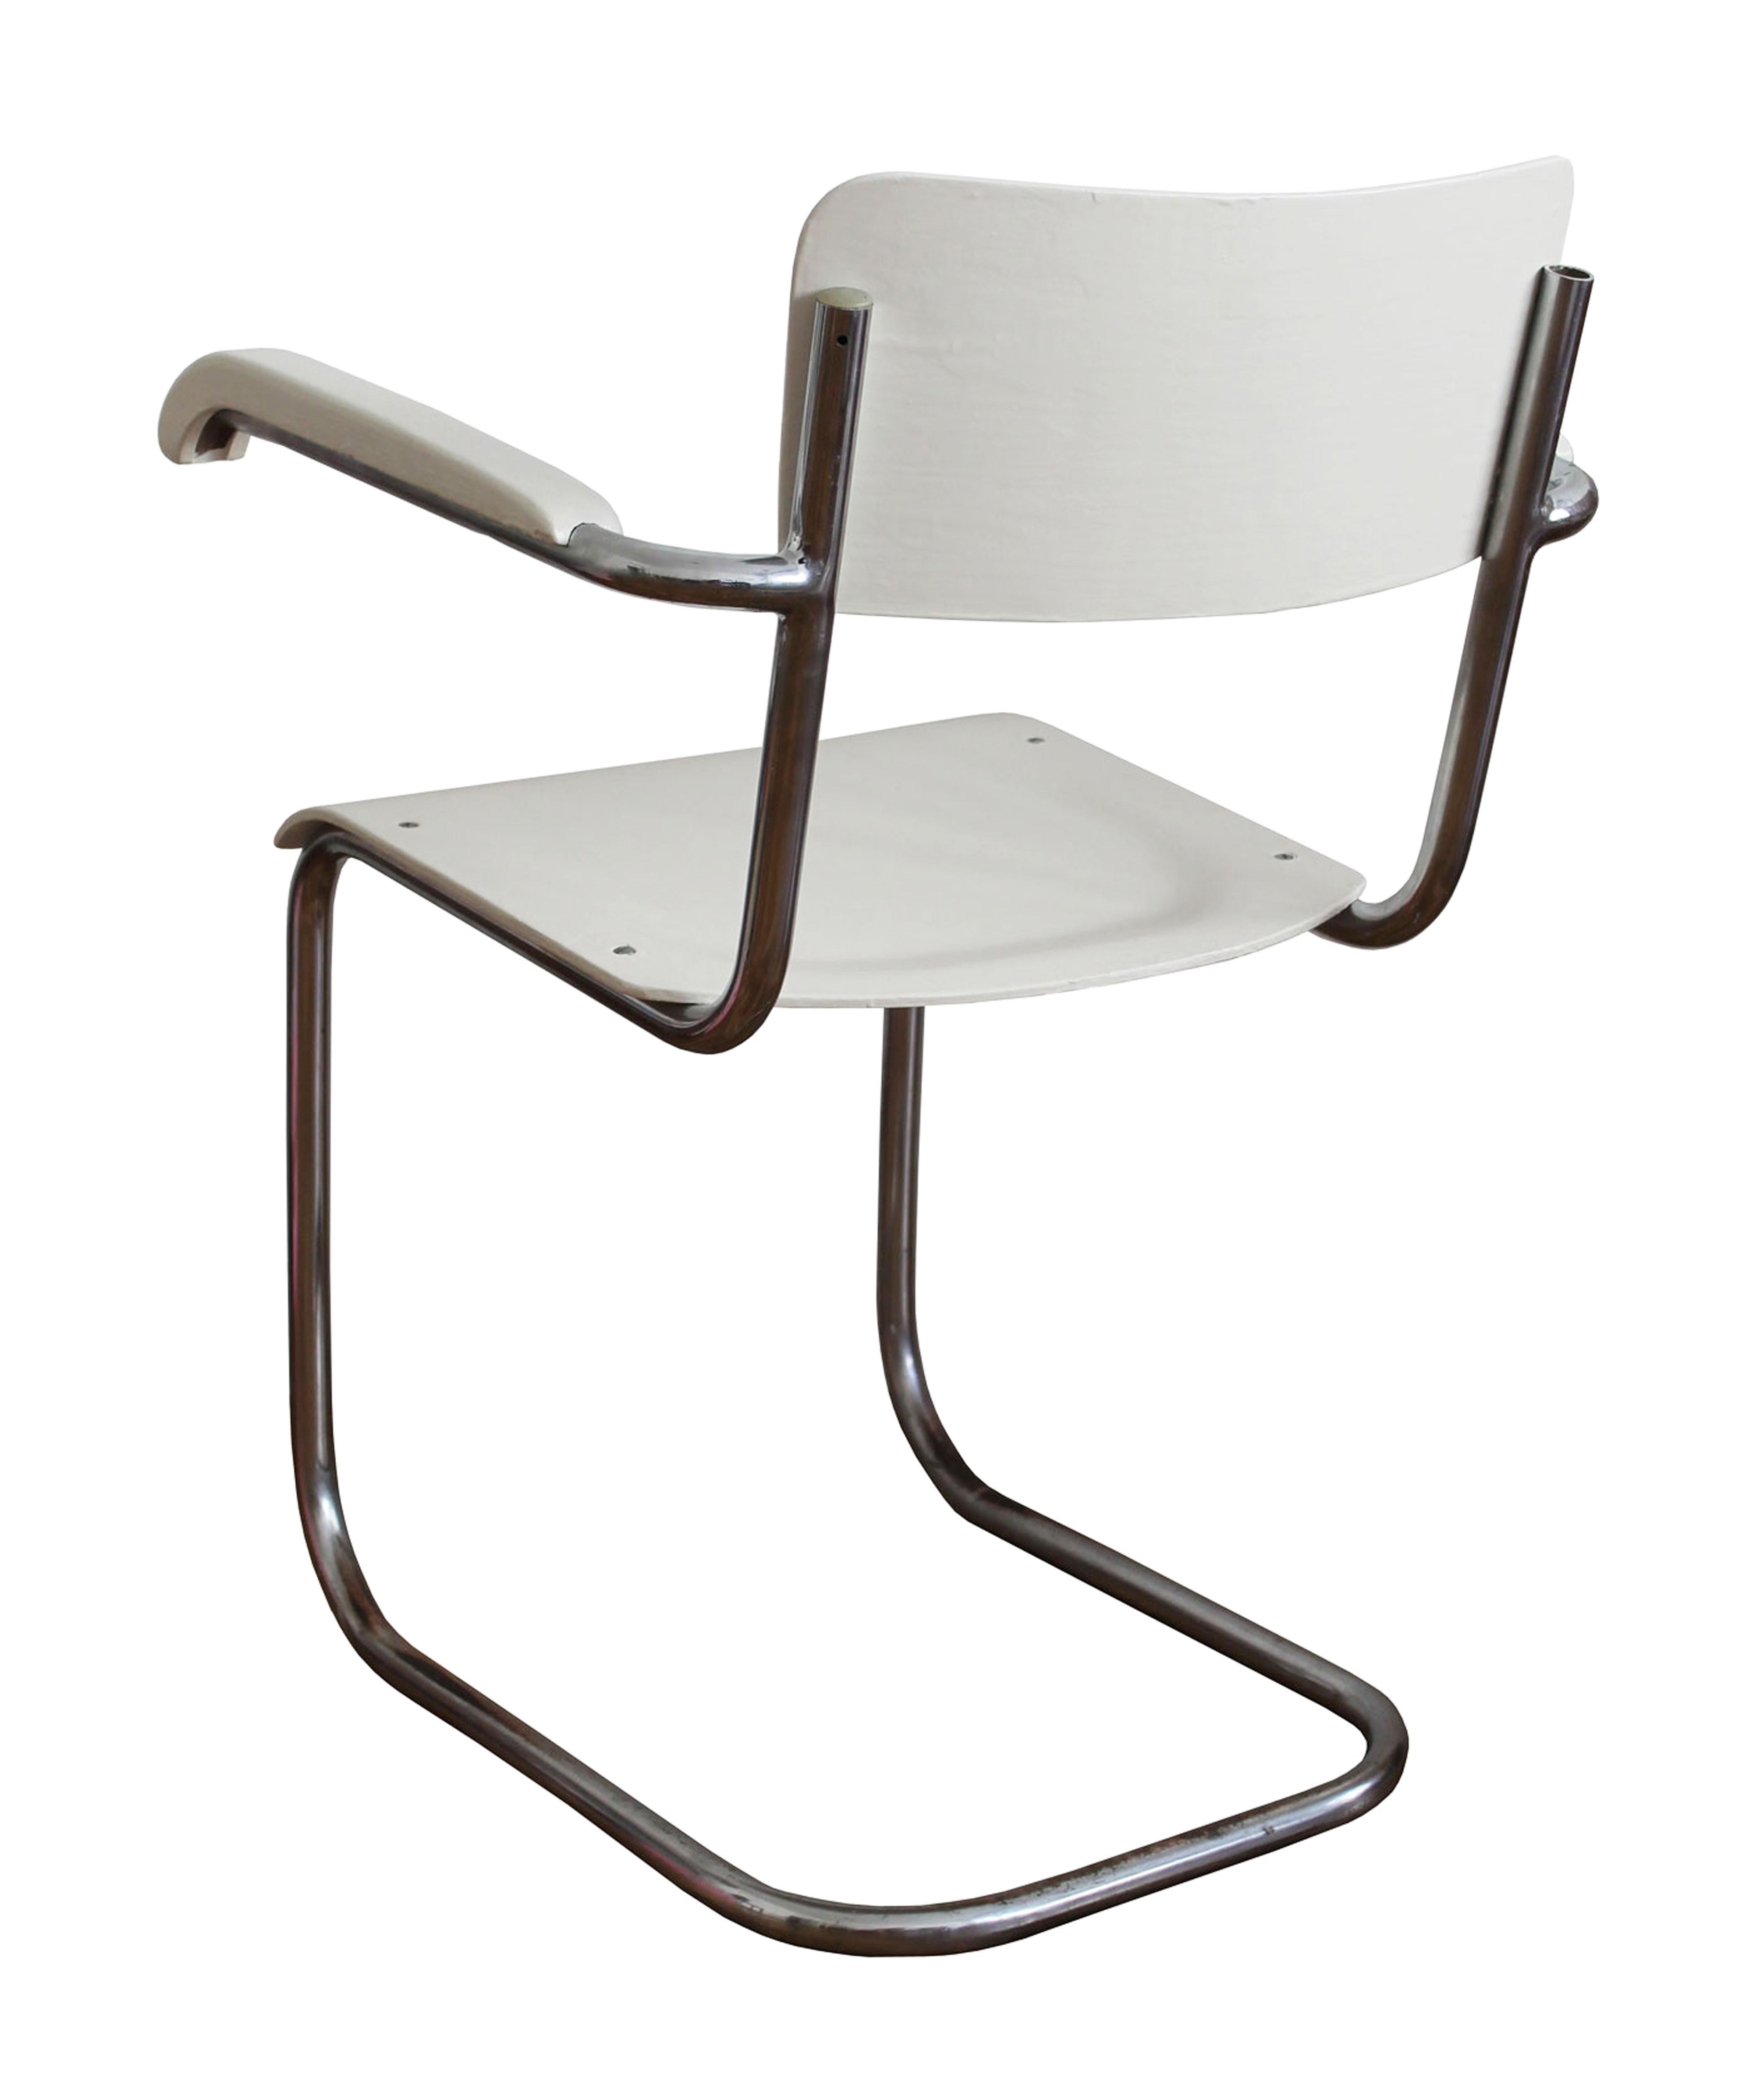 Bauhaus 1930's Modernist Tubular Chair